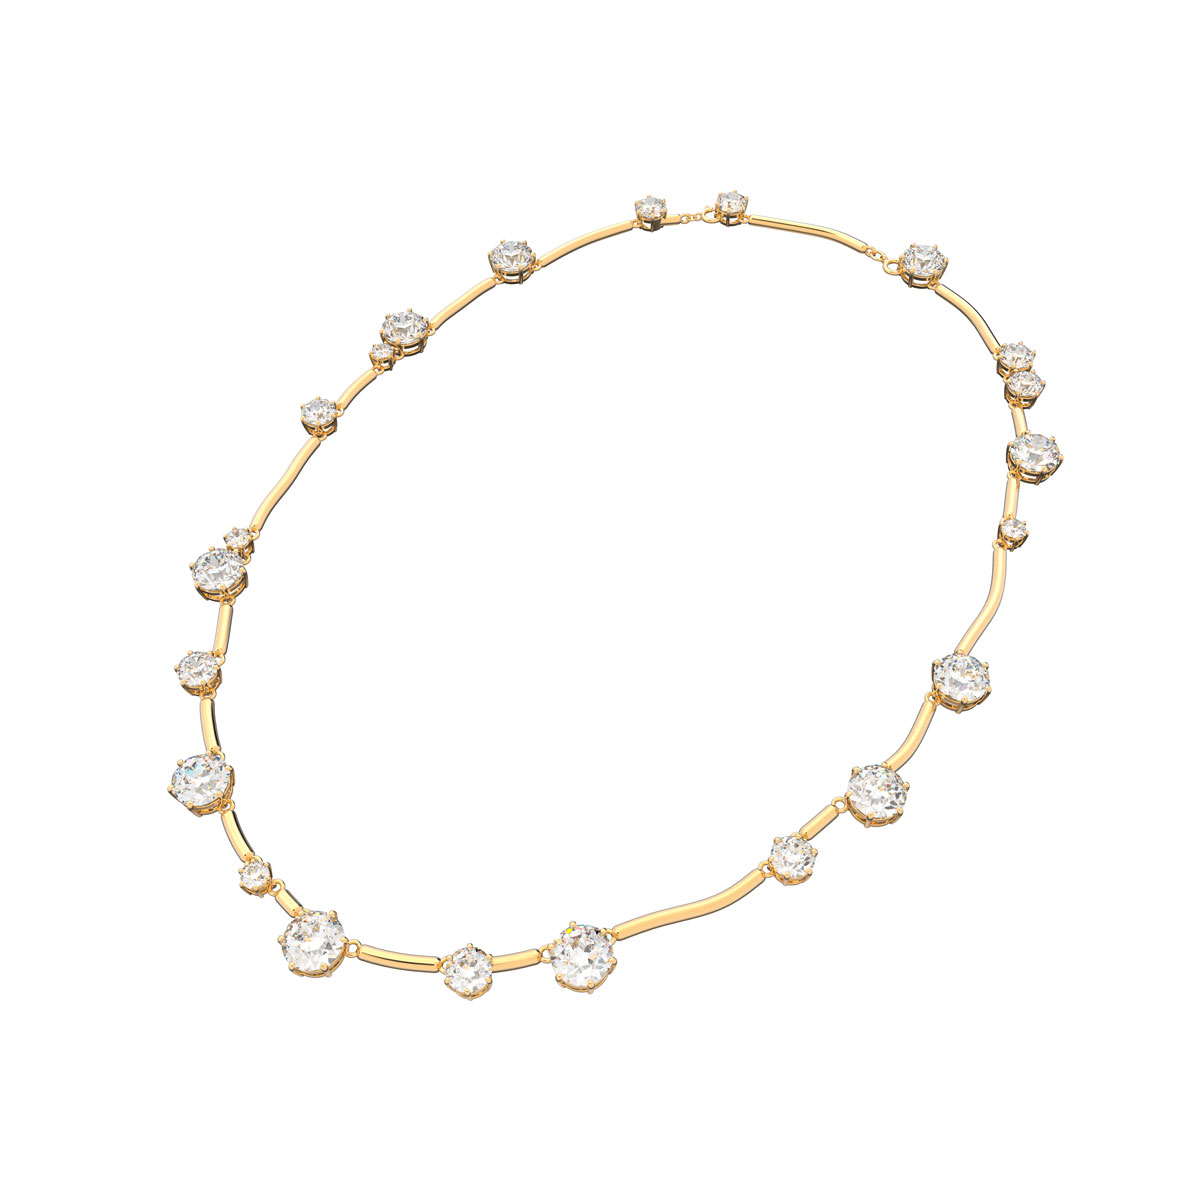 Swarovski Constella Necklace, Round Cut Crystal, White, Gold-Tone Plated